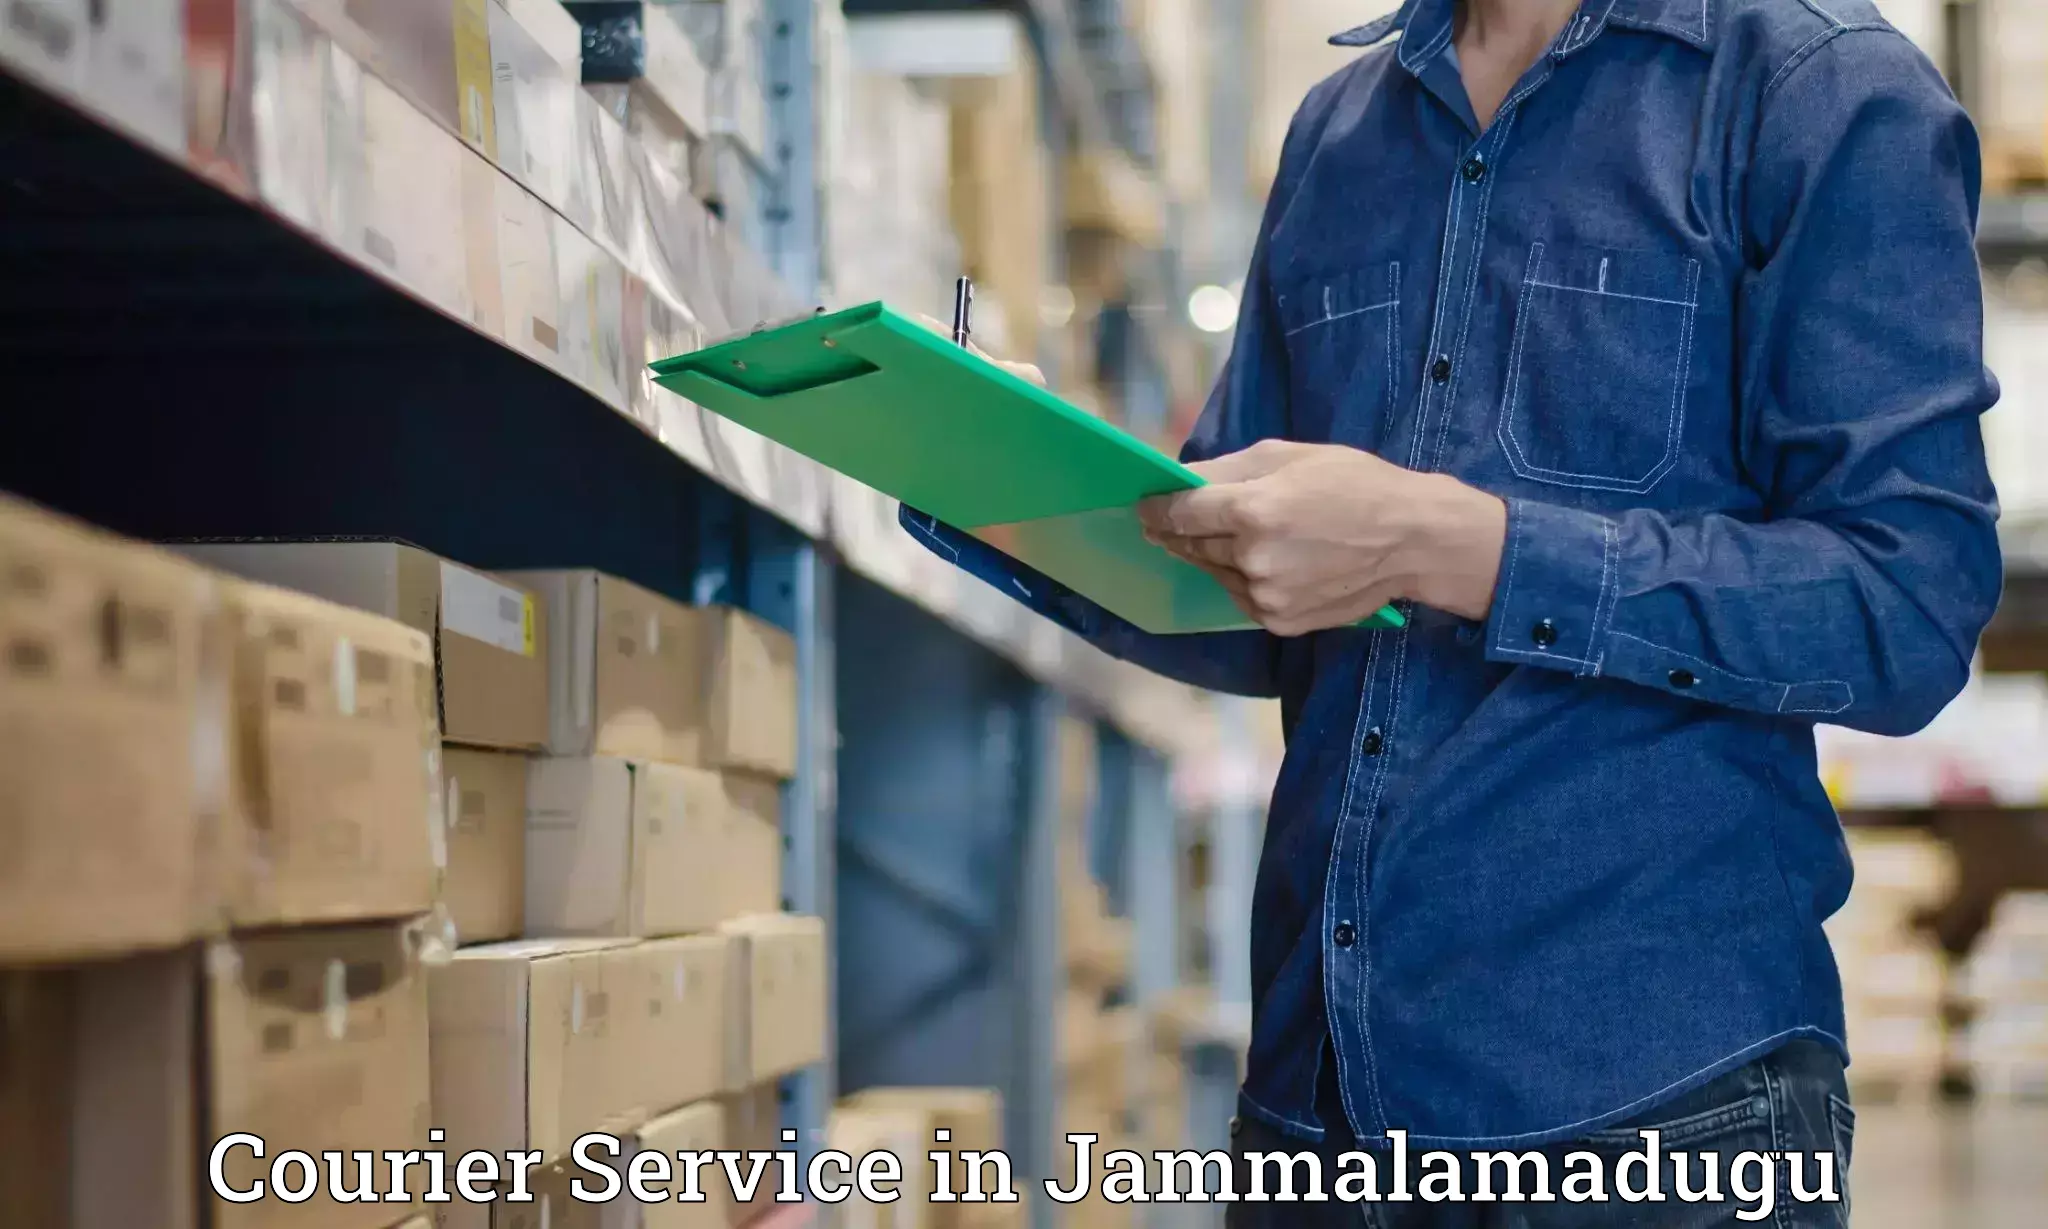 Delivery service partnership in Jammalamadugu